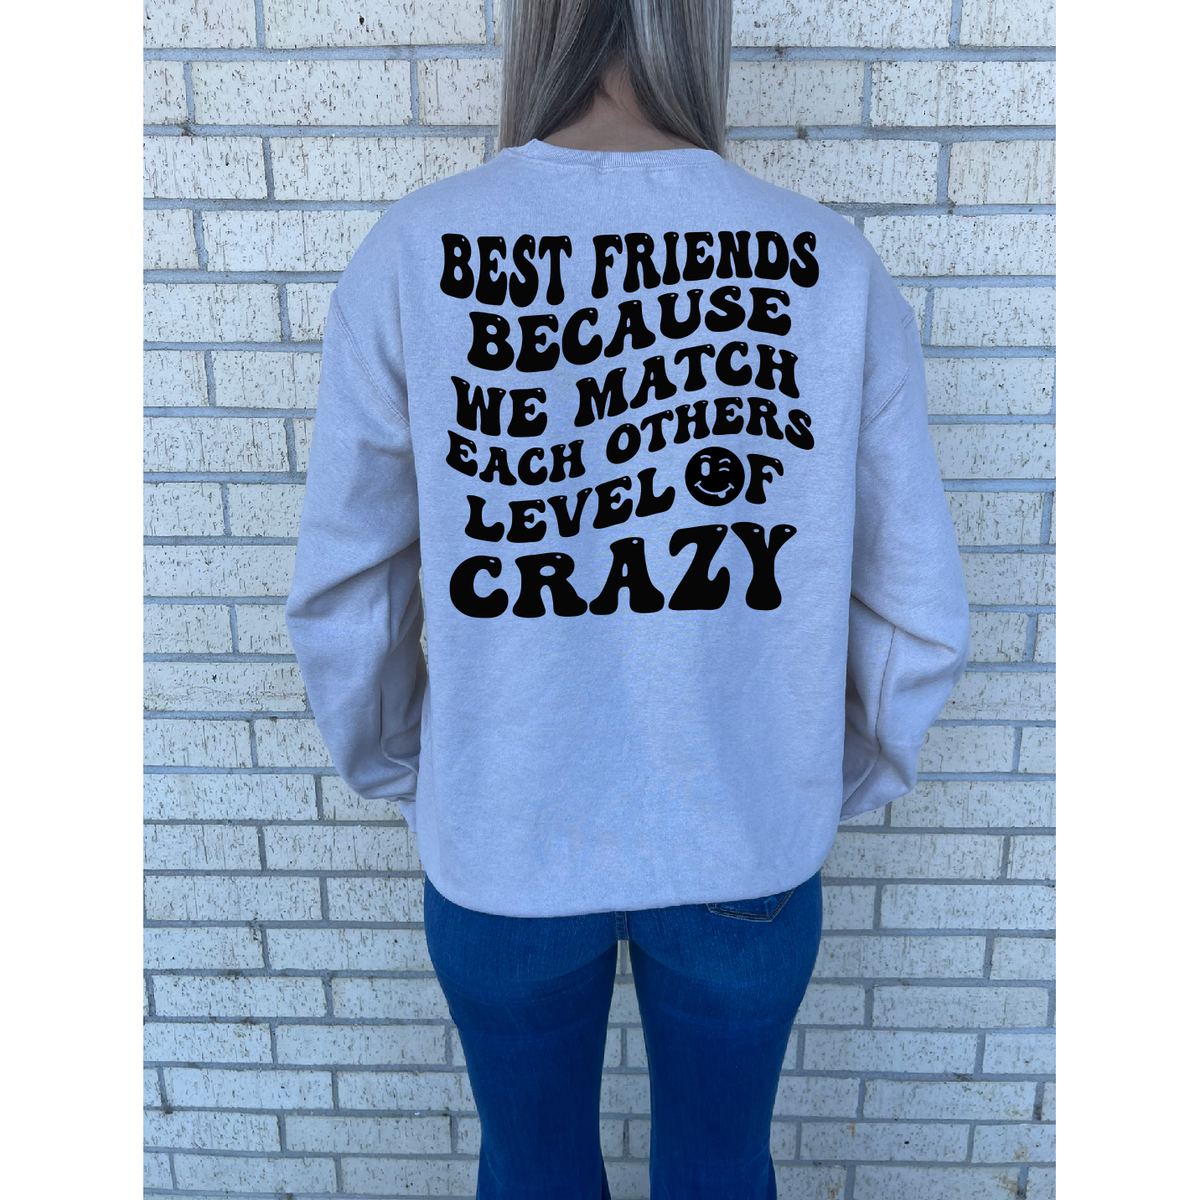 Best friends because we match crazy Tee or Sweatshirt